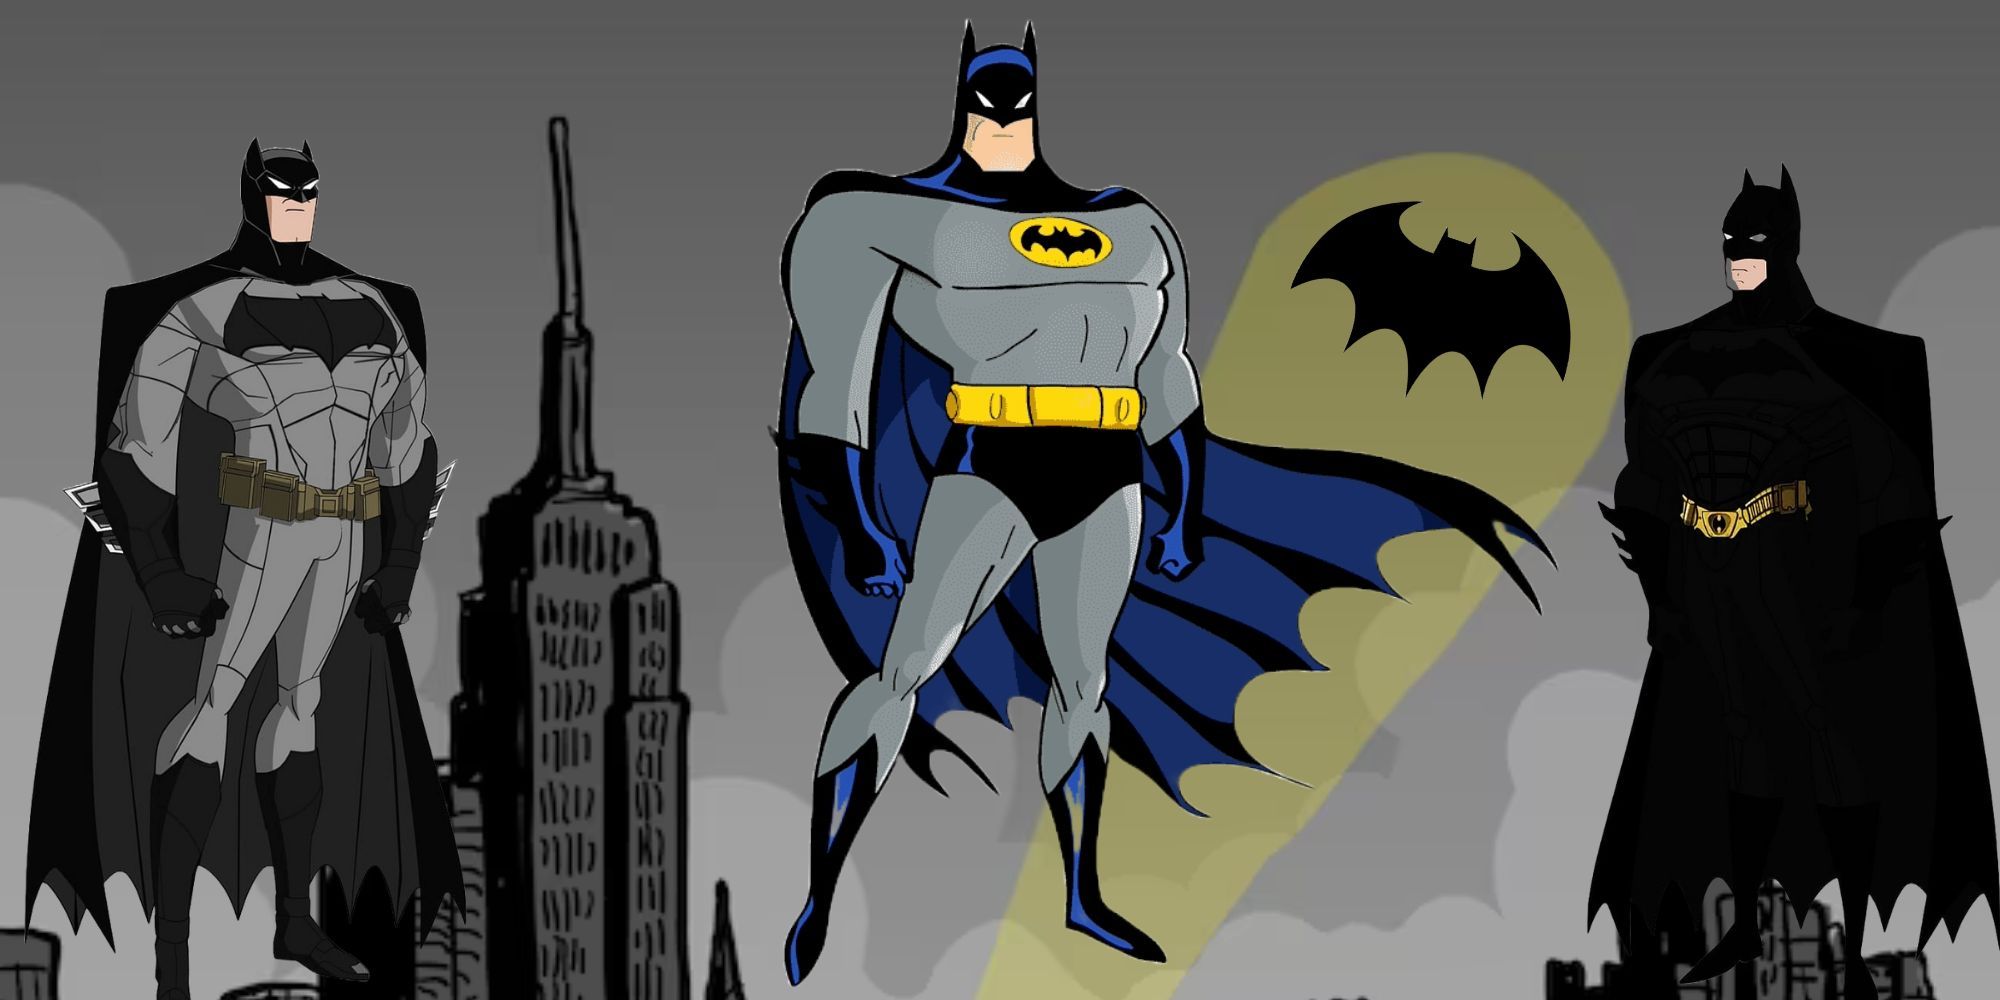 ArtStation - Batman Arkham Knight: Alternate Anime Batman Costume